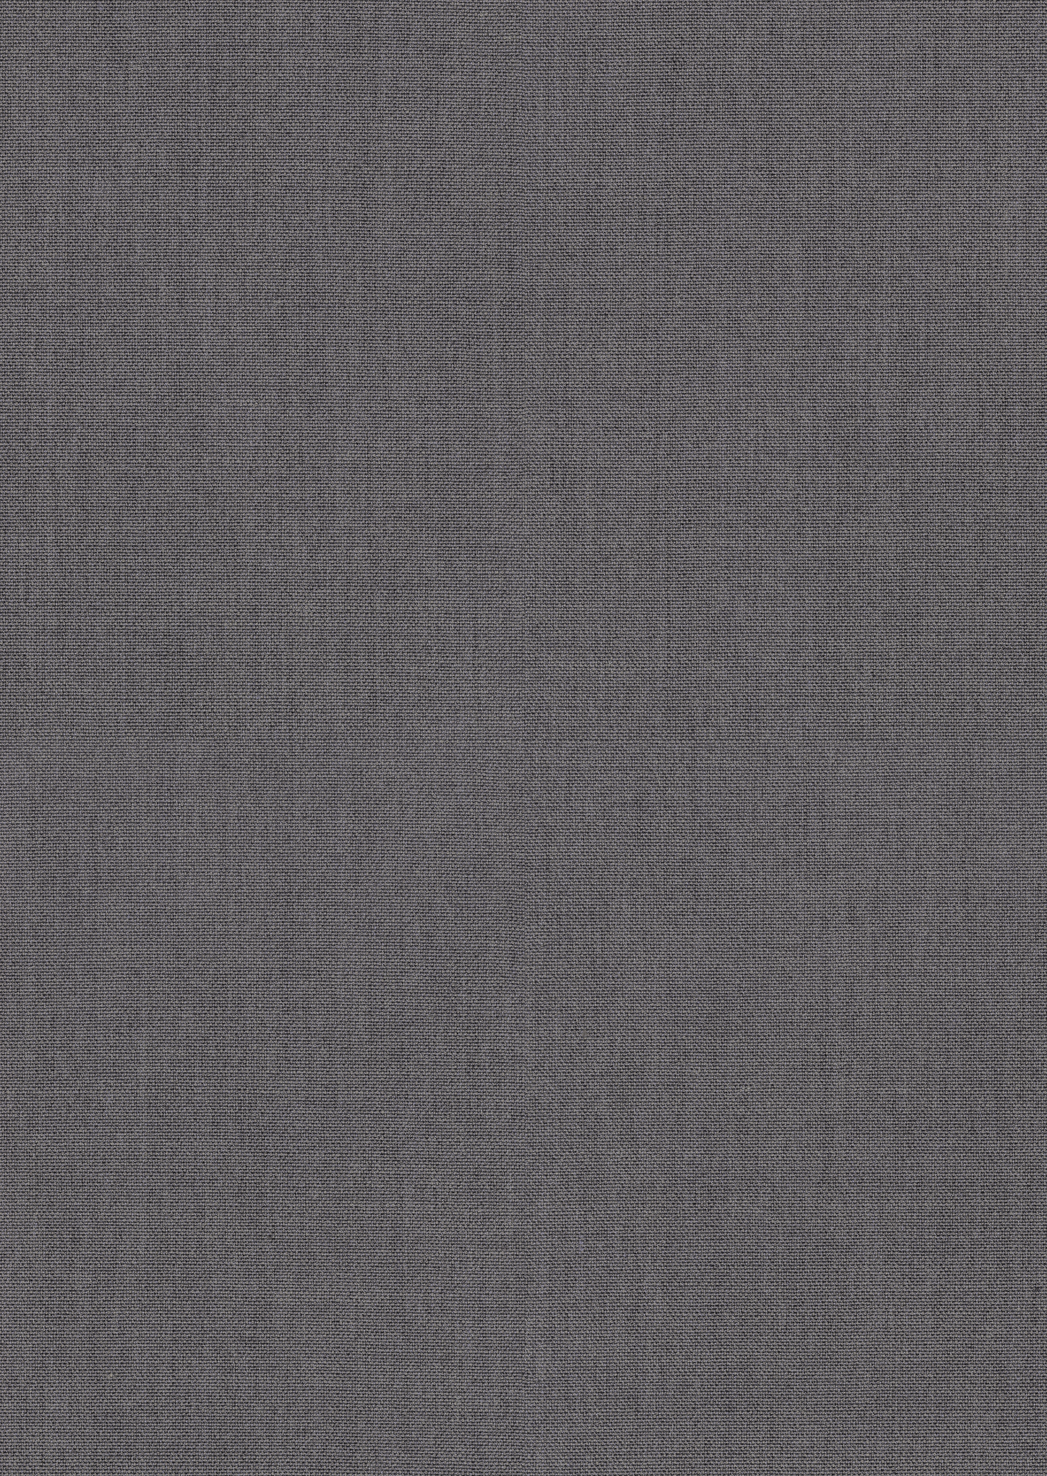 Fabric sample Remix 3 143 grey